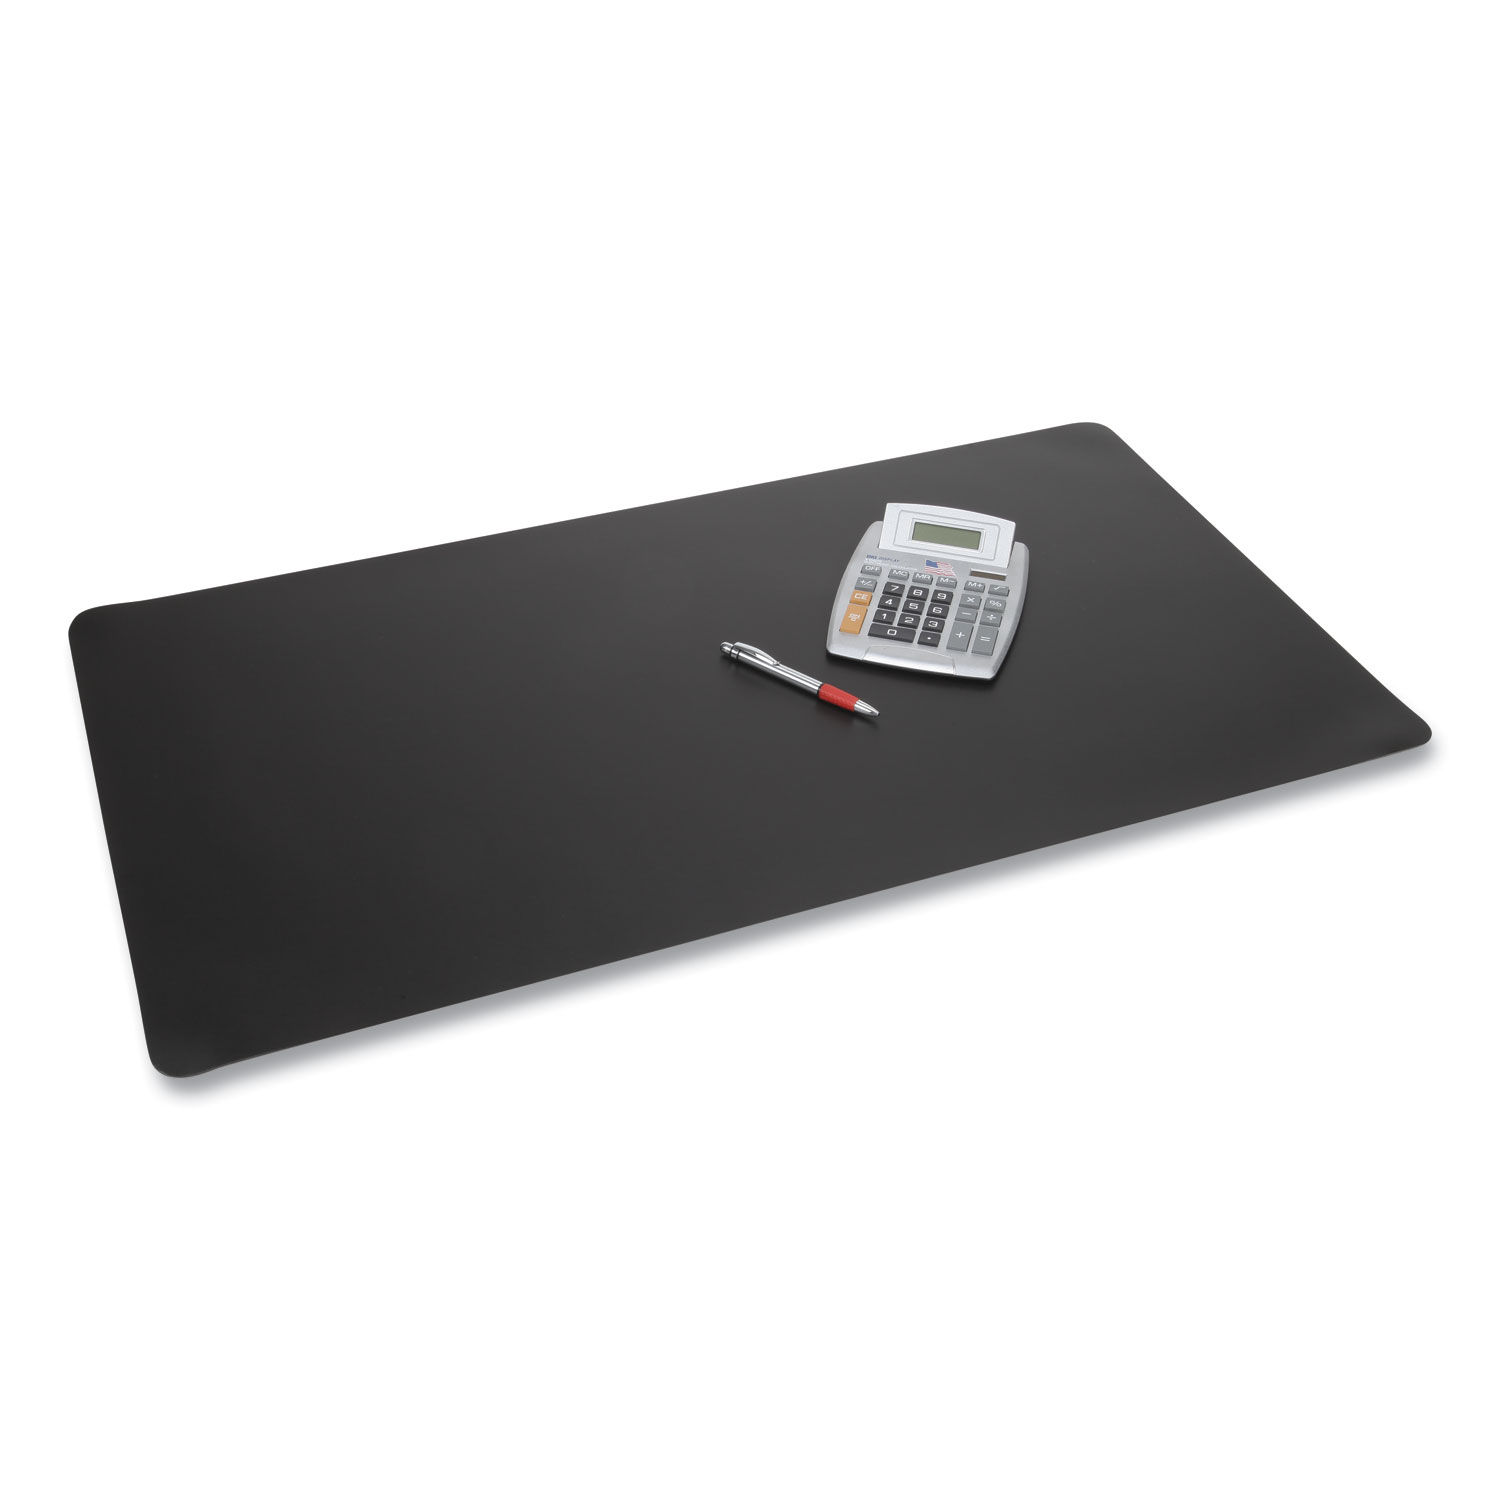 Rhinolin II Desk Pad with Antimicrobial Protection 17 x 12, Black